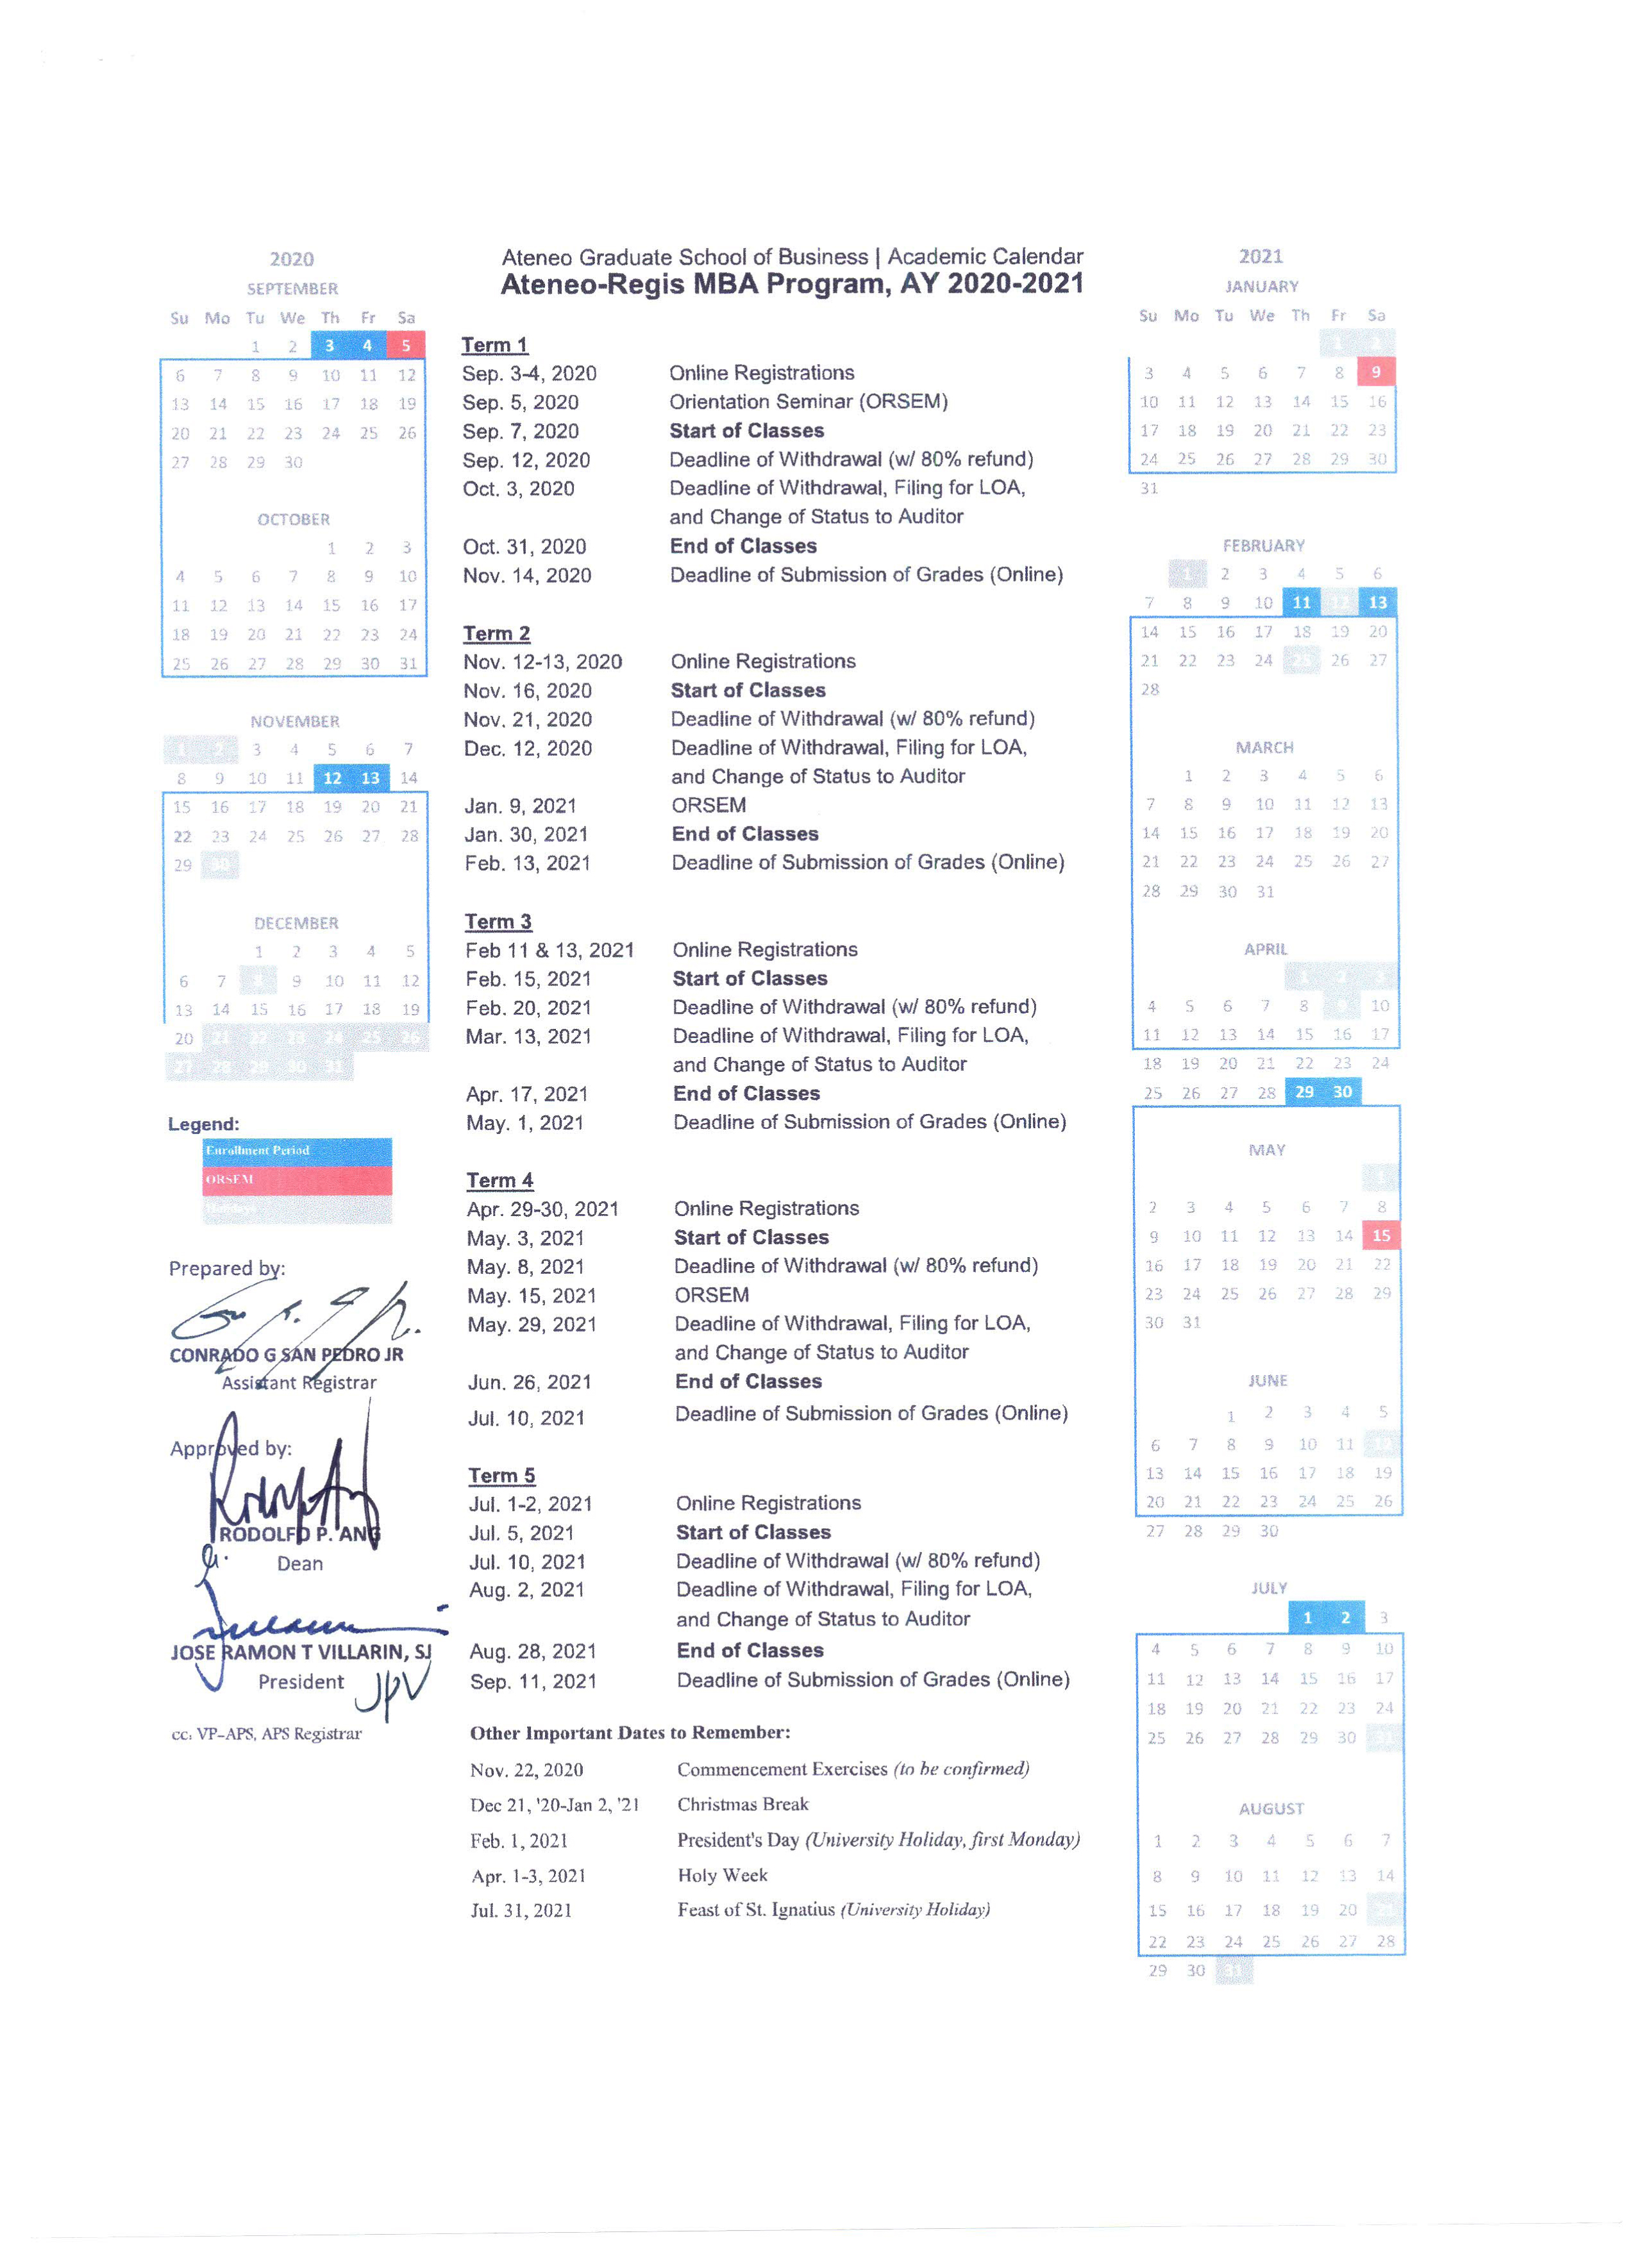 Academic Calendar SY 20202021 Ateneo Graduate School of Business